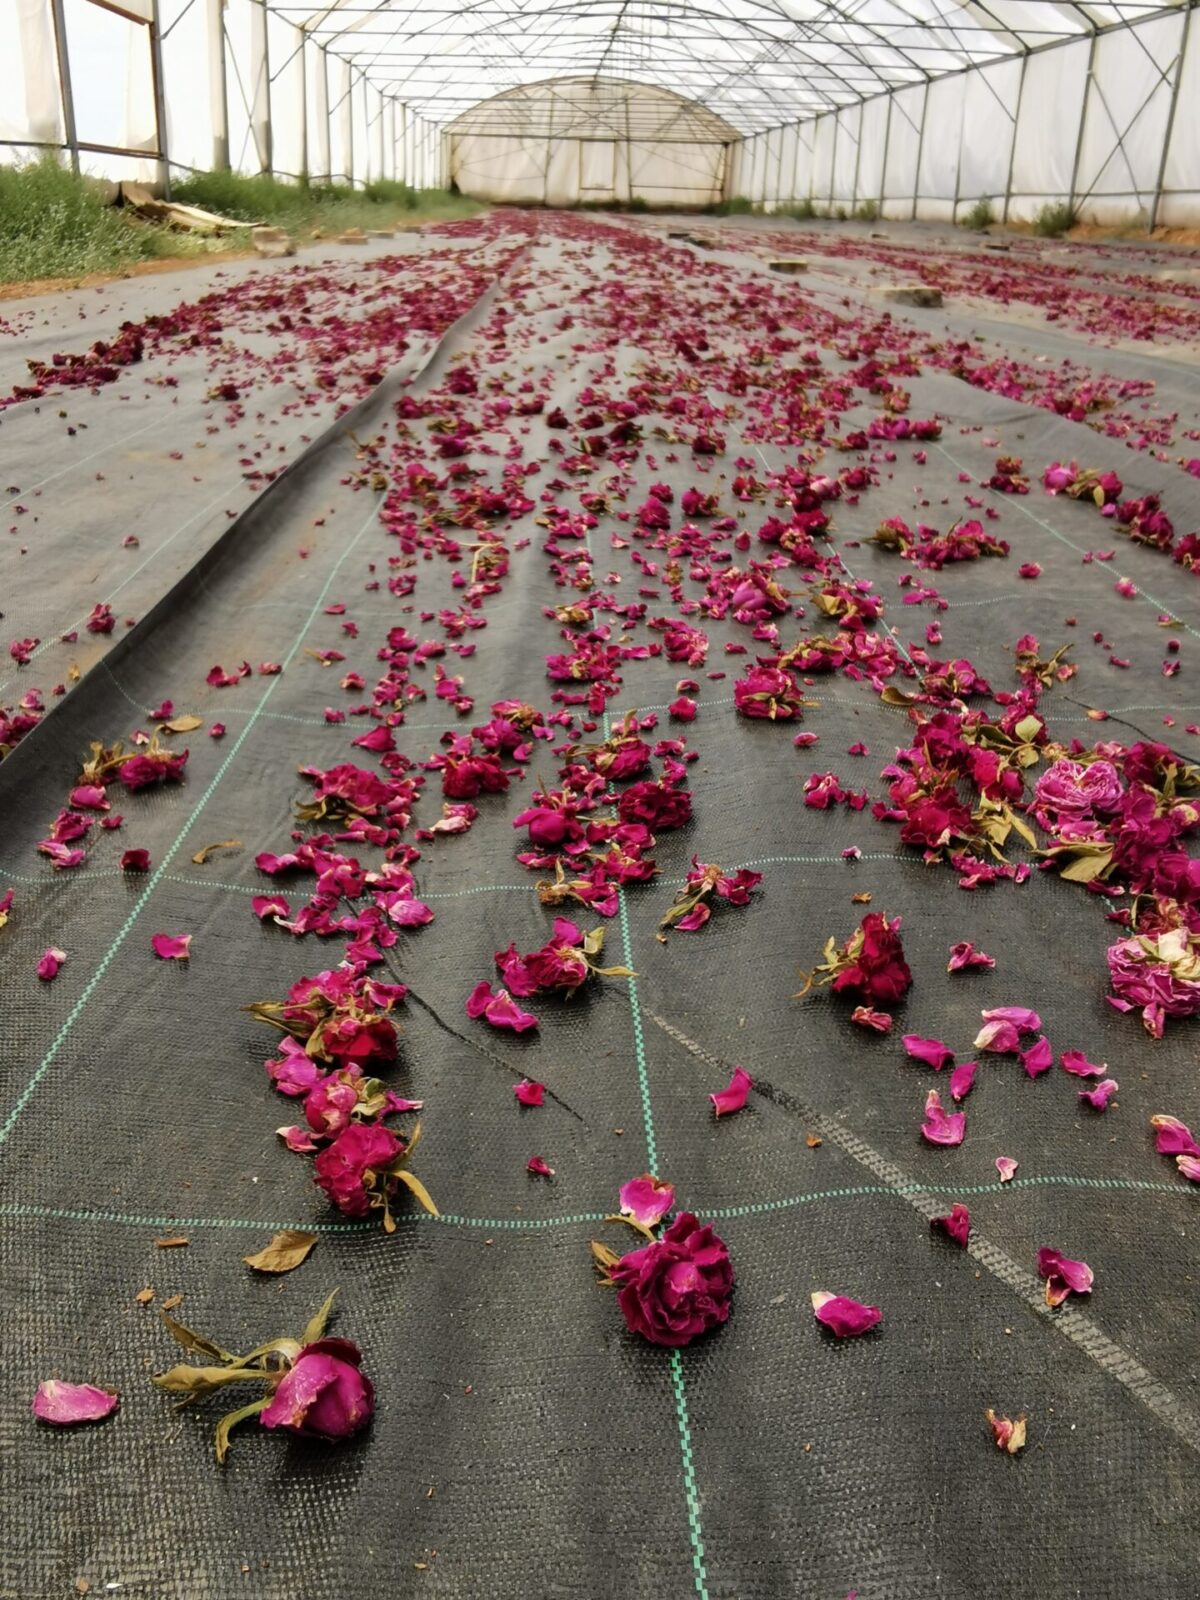 Syrian rose farm in central Anatolia, Turkey